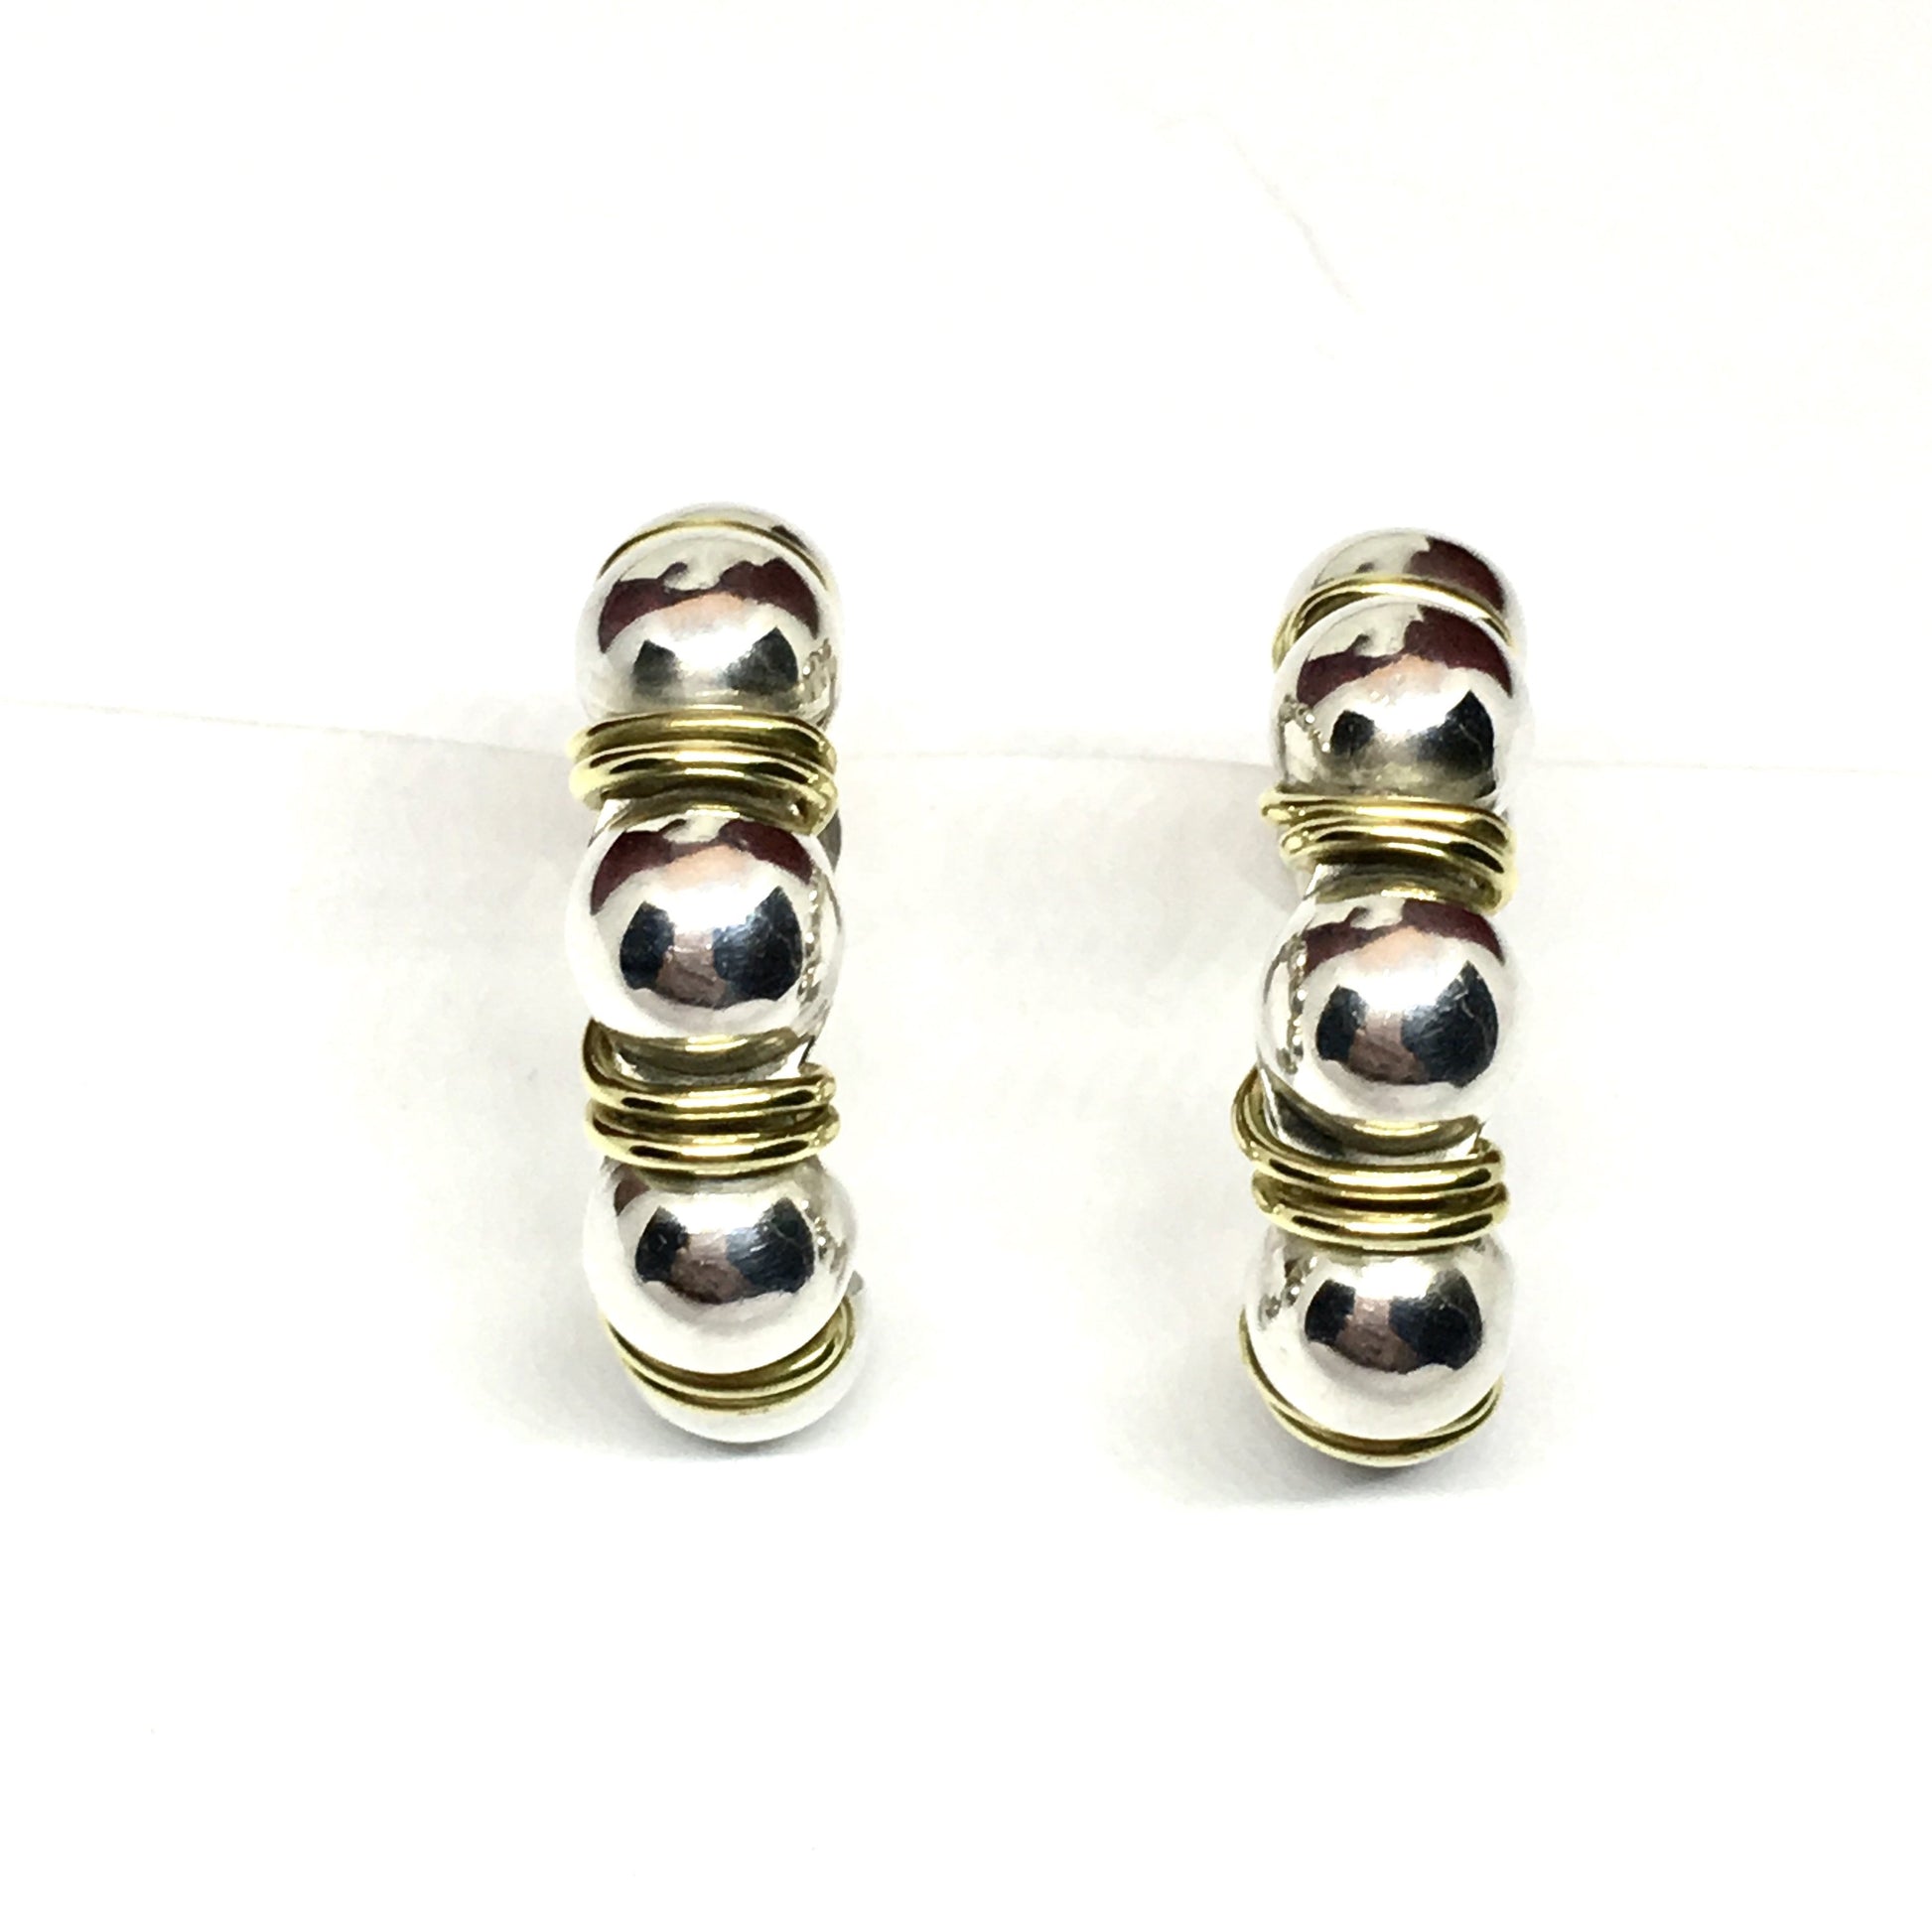 Earrings | Pre-owned, Sterling Silver Ball Studded Wire Textured Design Hoop Earrings - Blingschlingers.com USA